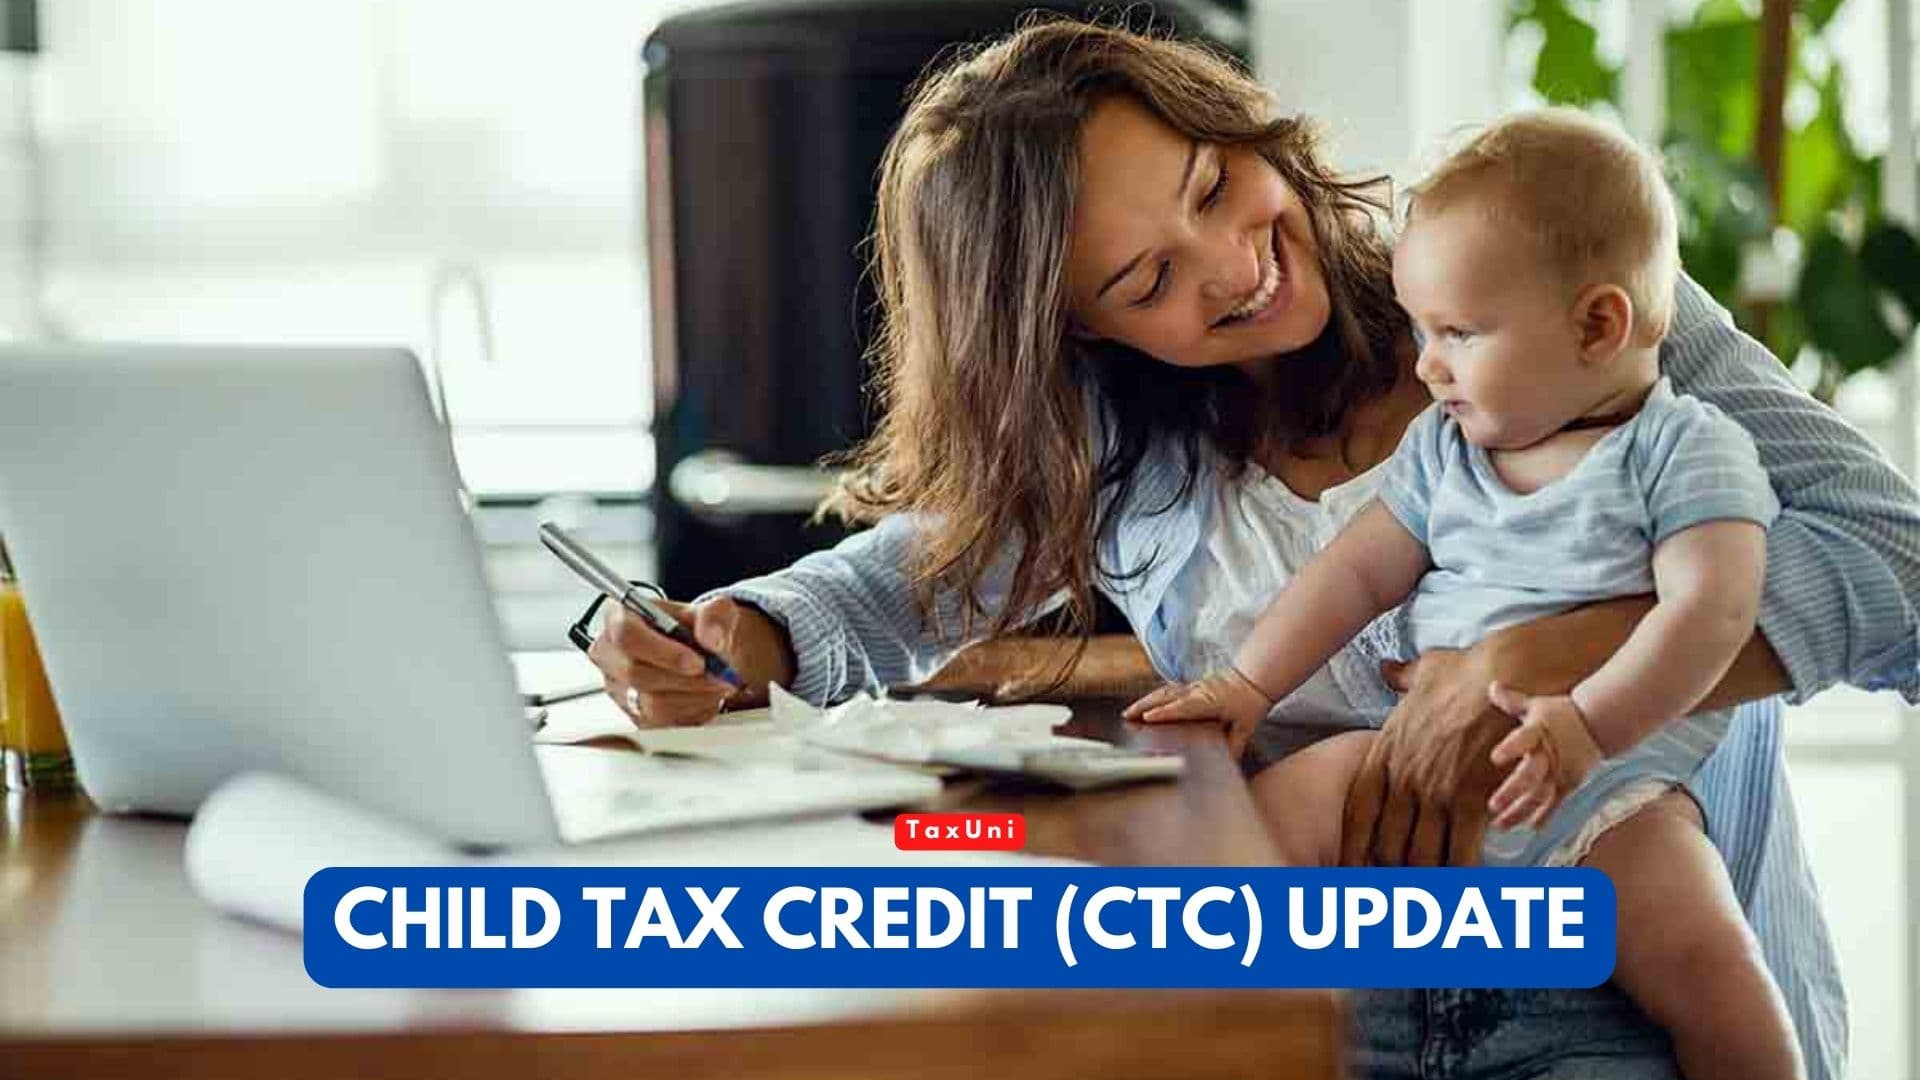 minnesota-rebate-checks-and-child-tax-credit-coming-soon-kiplinger